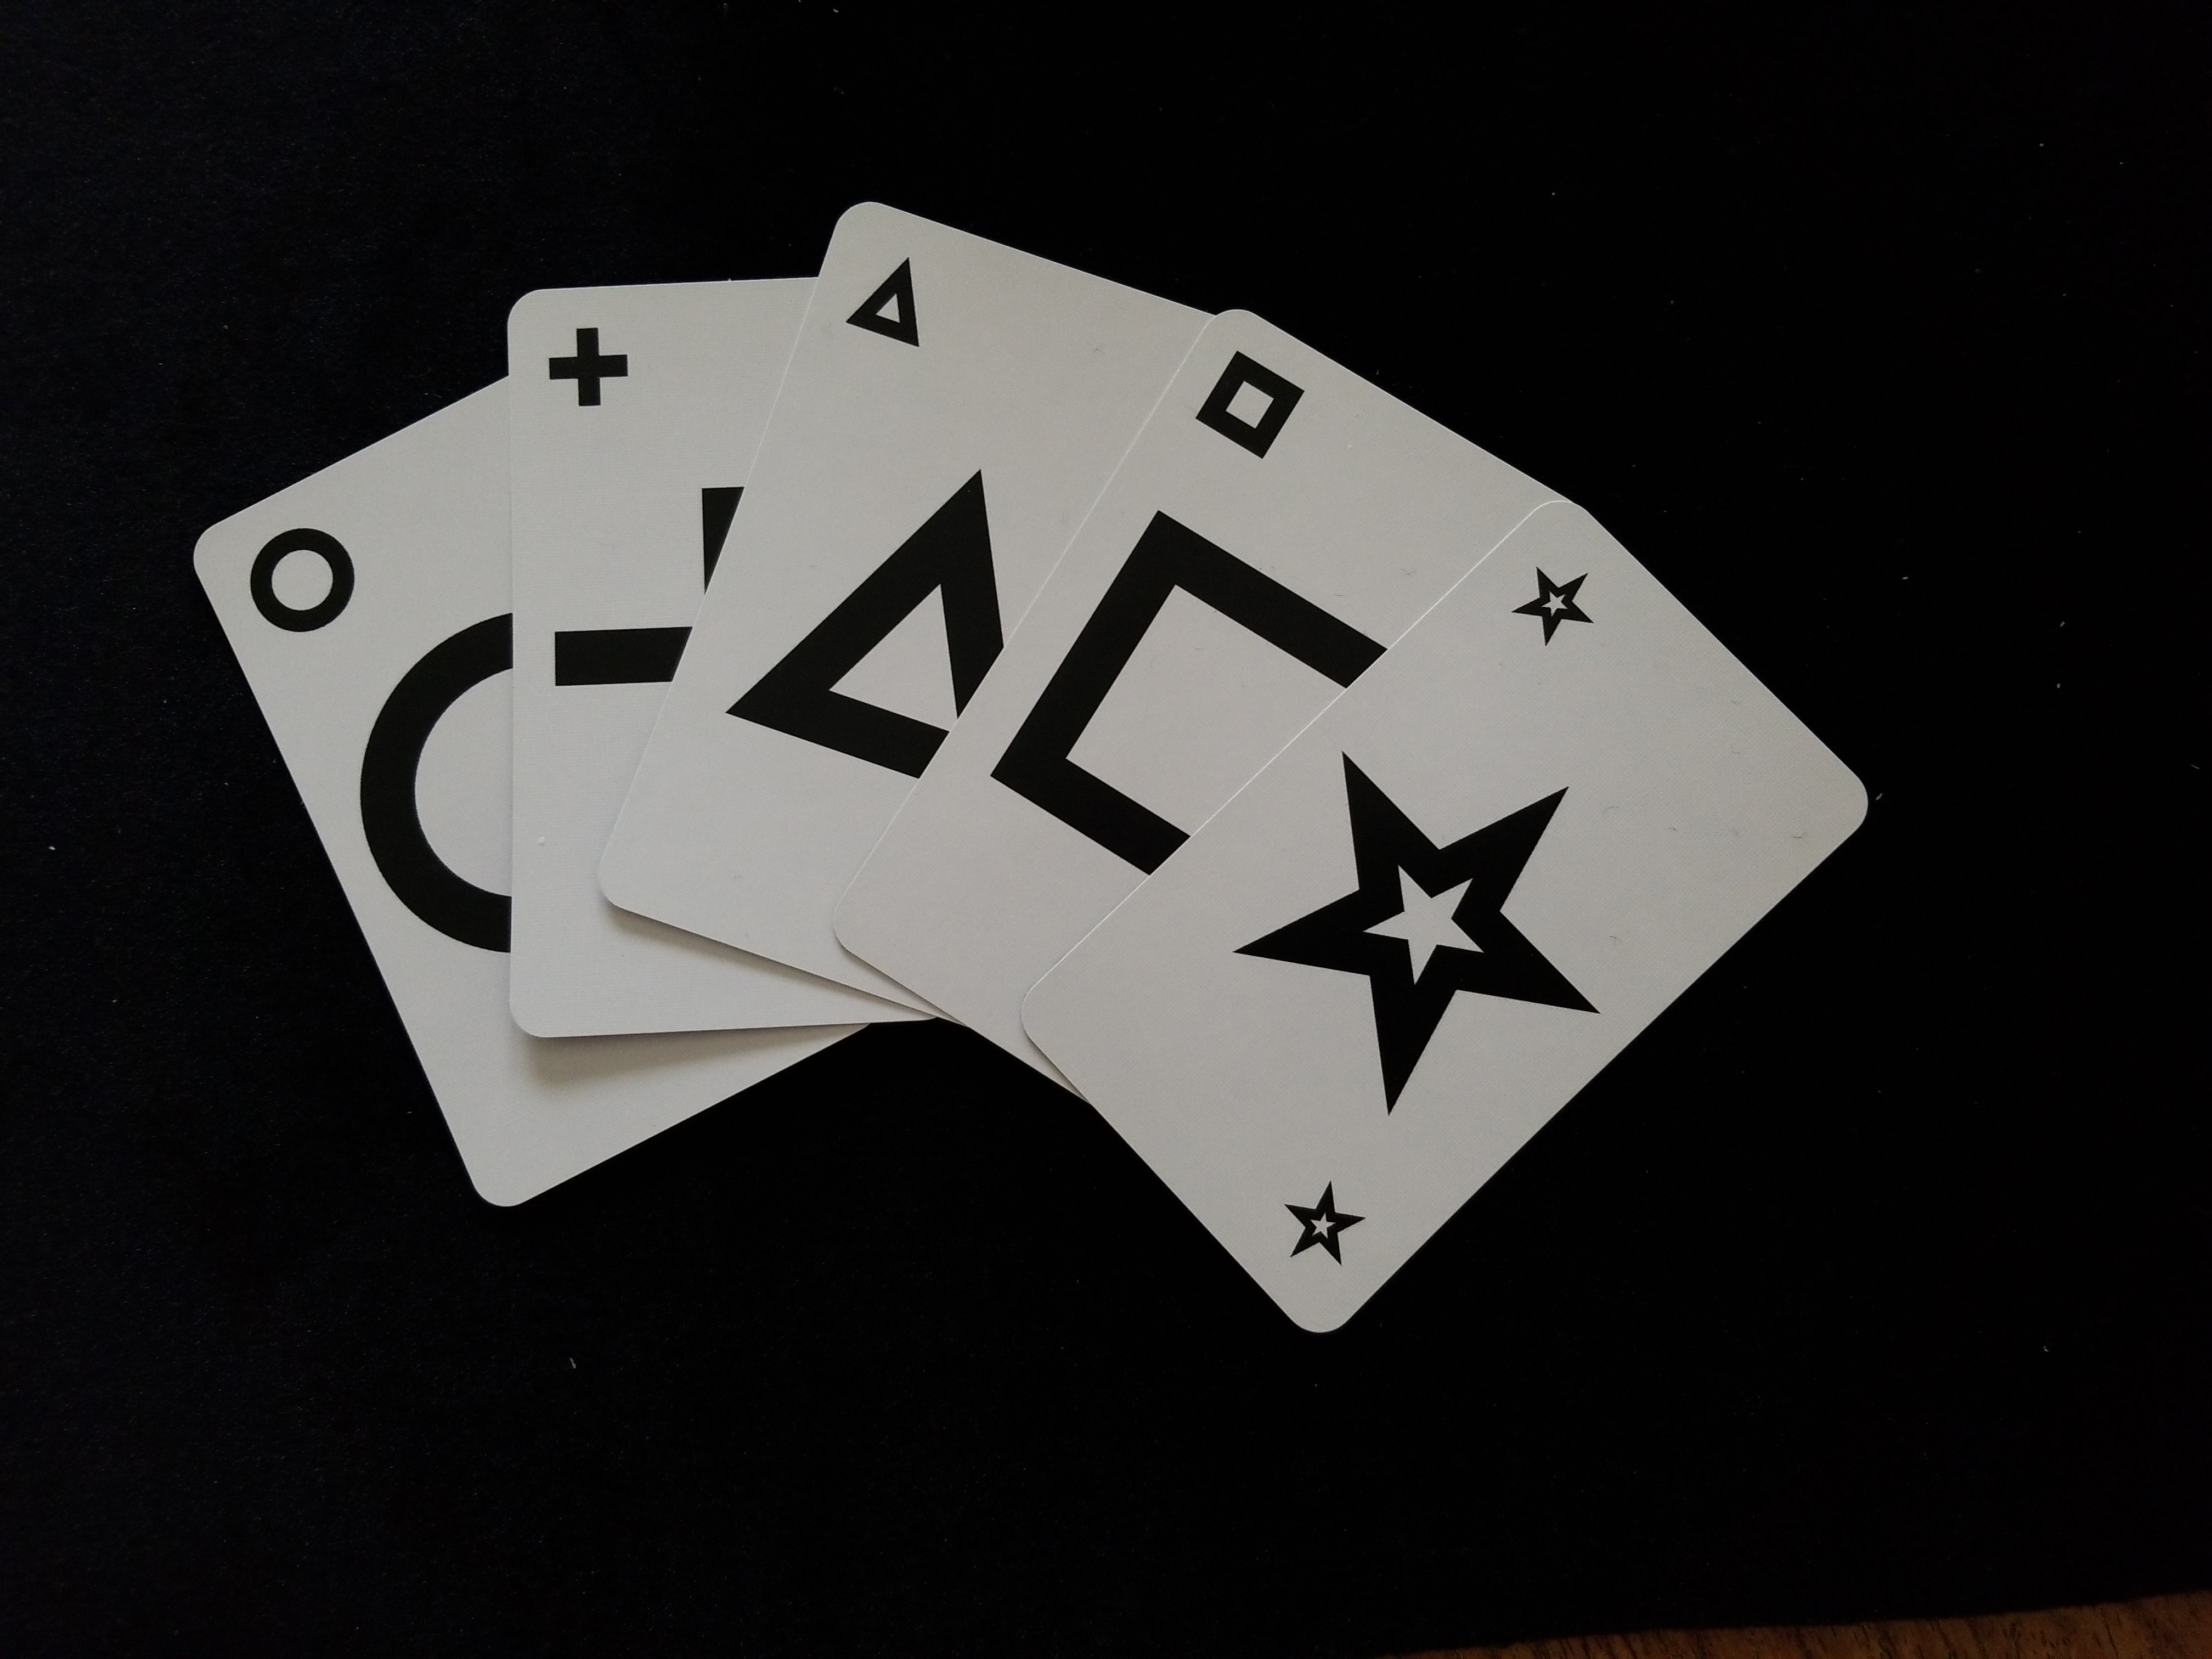 cards spread